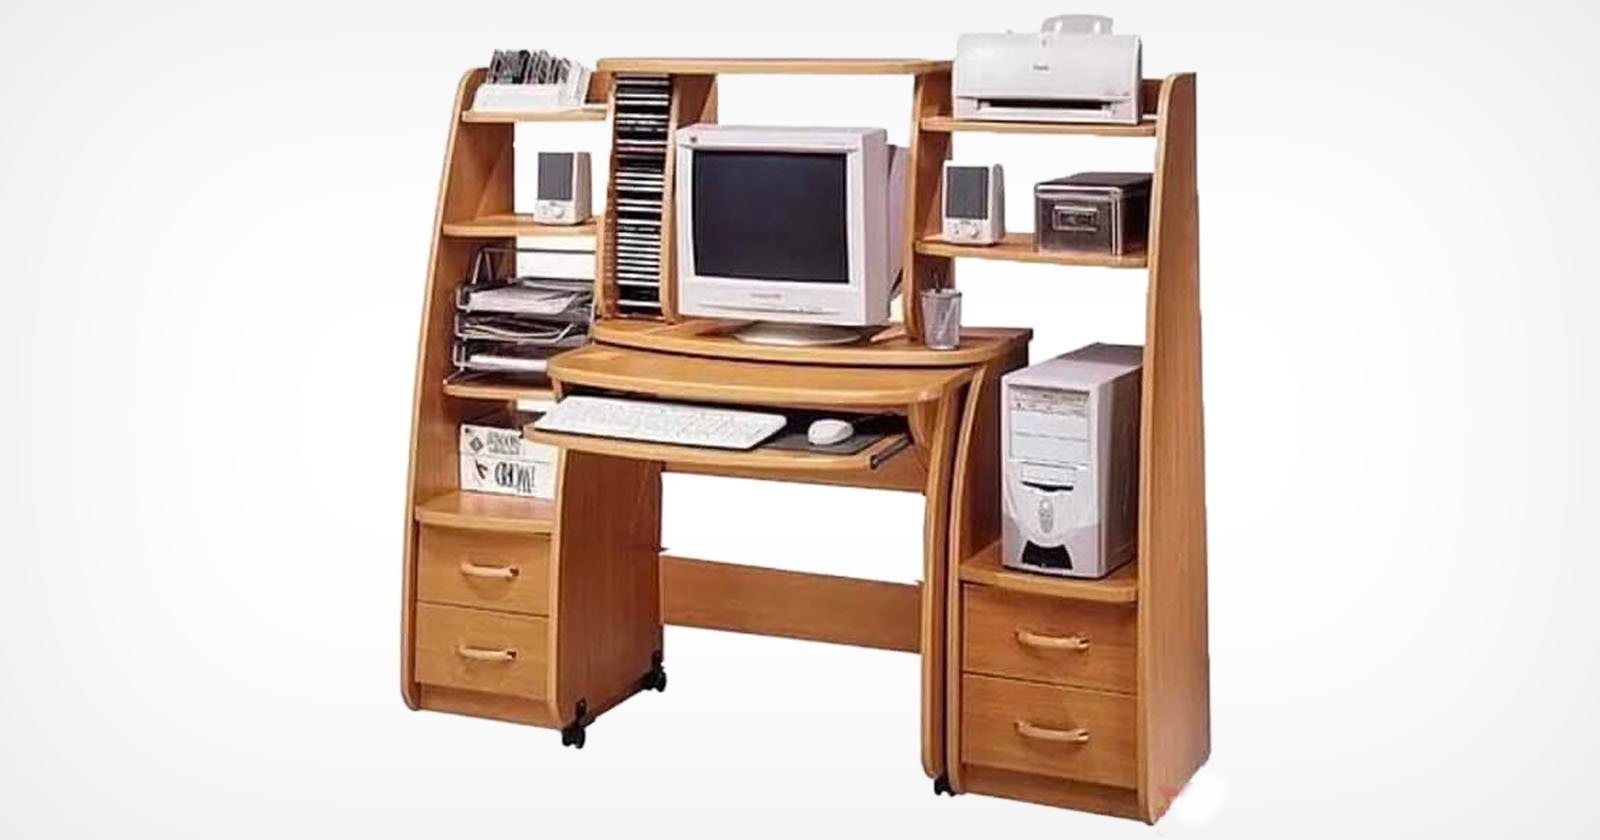  photo classic computer setup taken when internet 